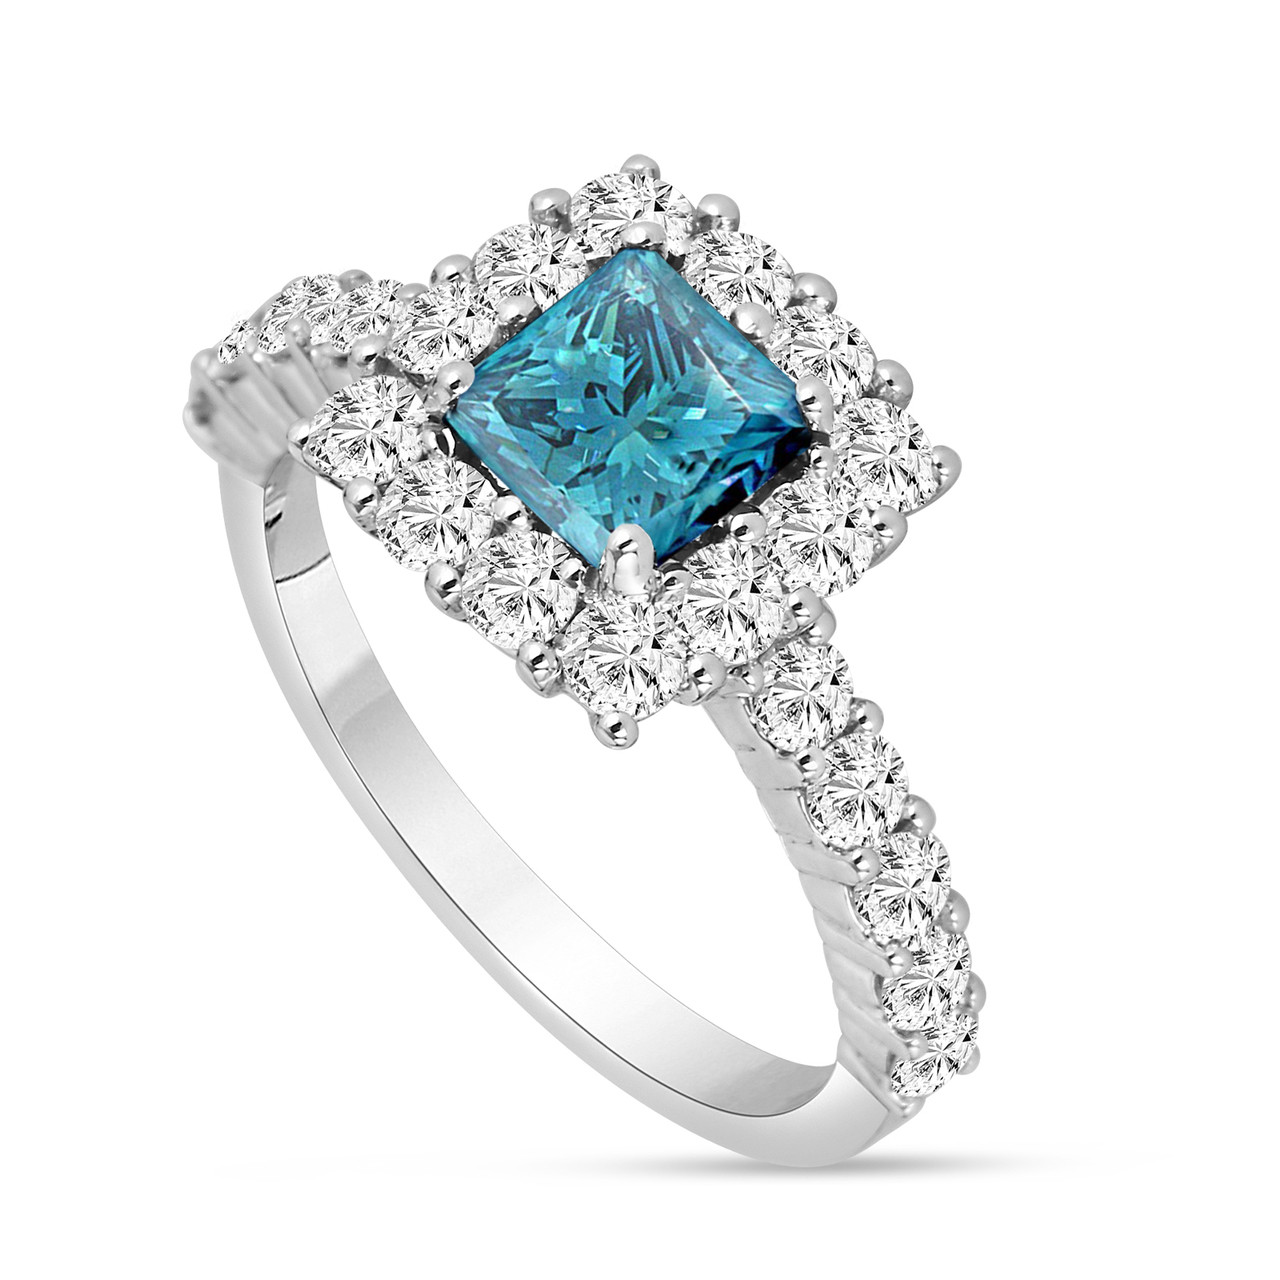 Princess Cut Blue Diamond Engagement Rings
 Platinum Princess Cut Fancy Blue Diamond Engagement Ring 2